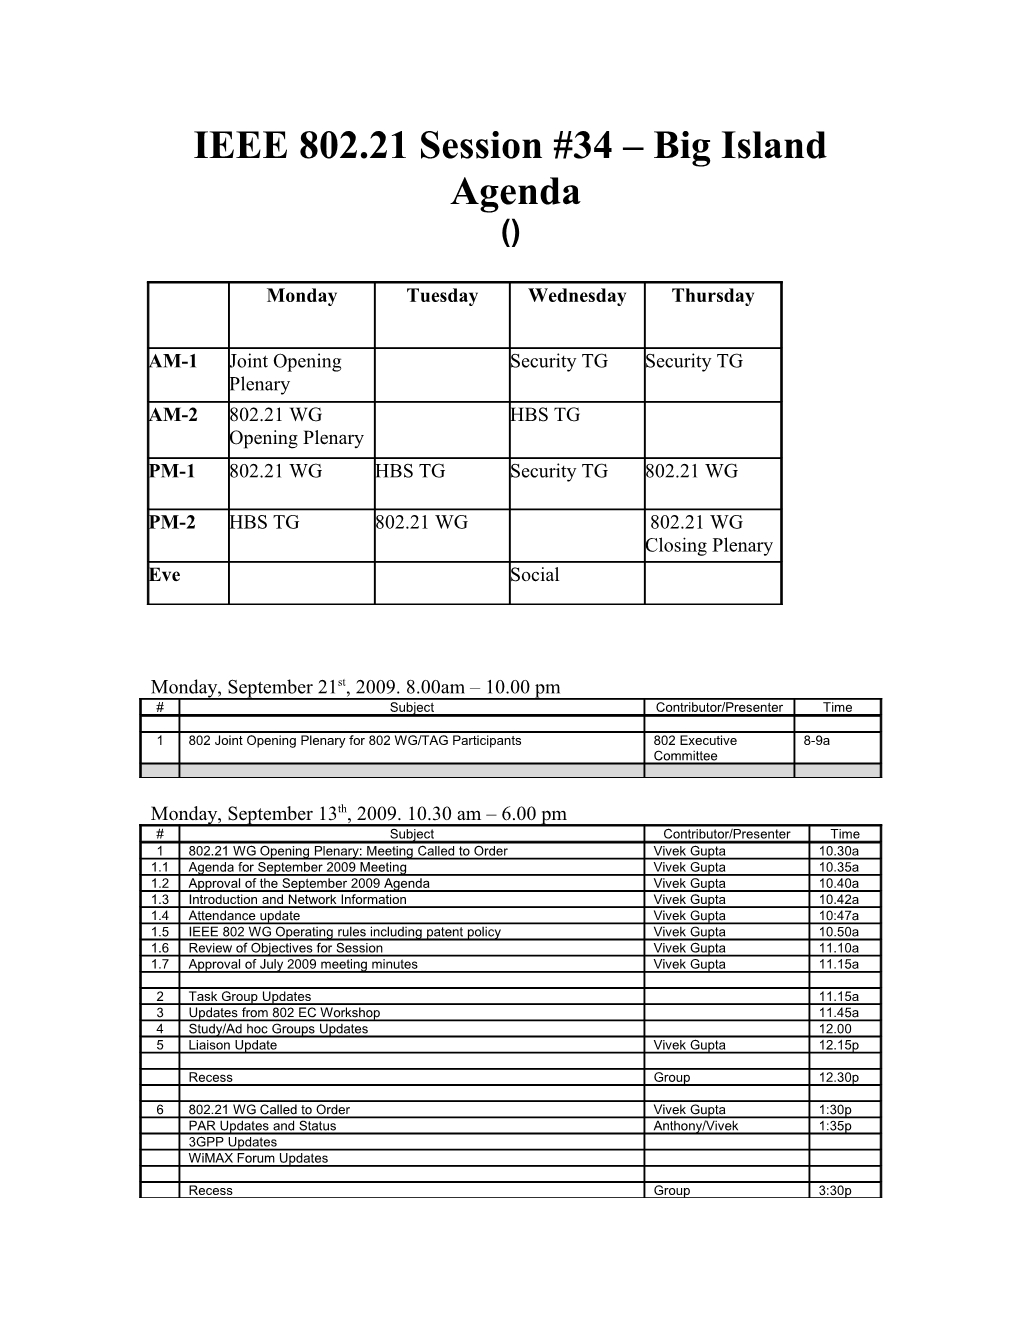 IEEE 802.21 Session #34 Big Island